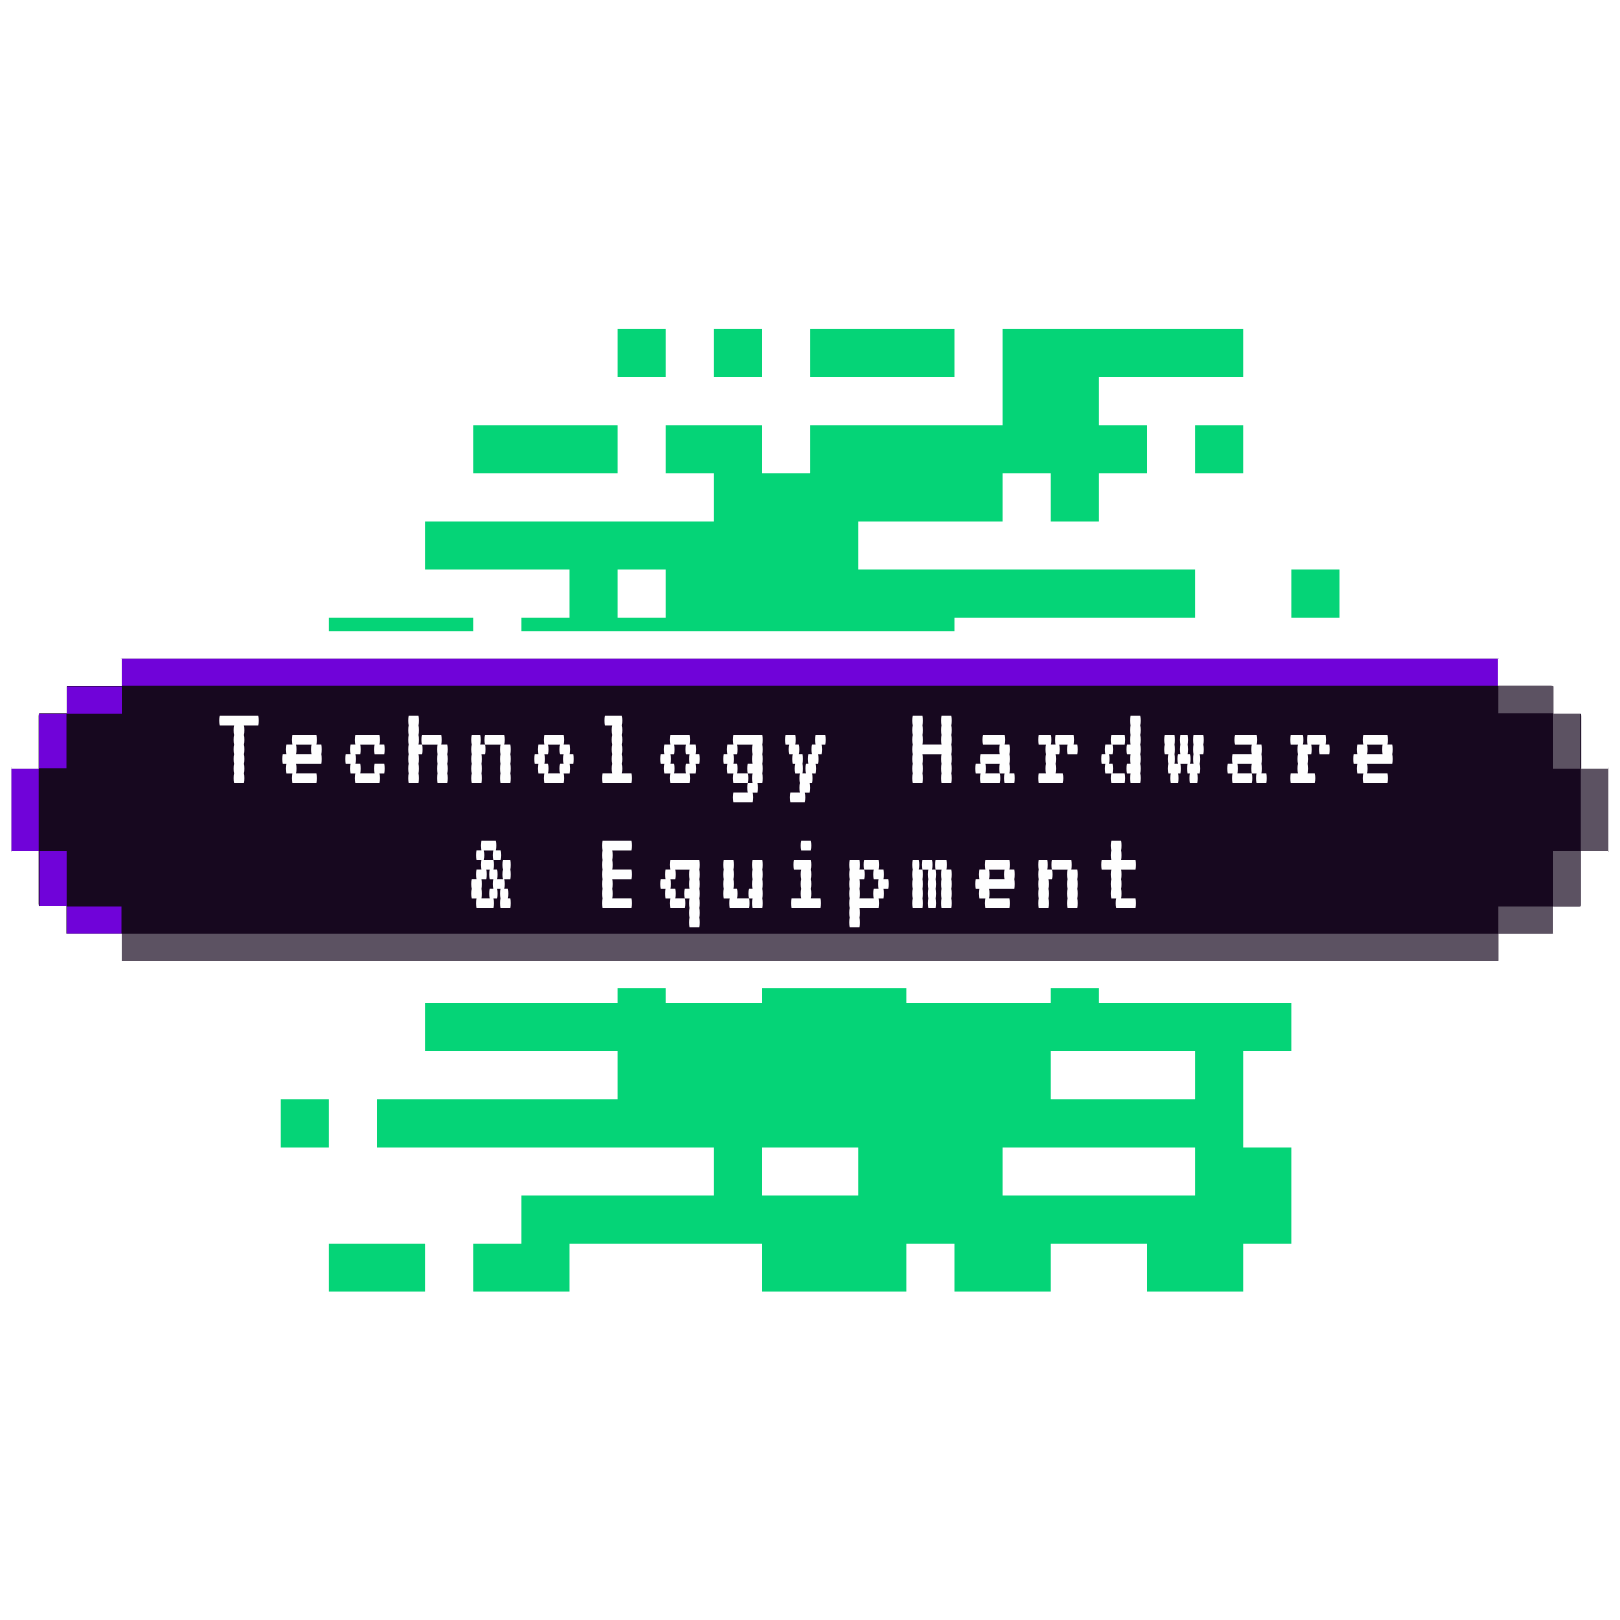 Technology Hardware & Equipment